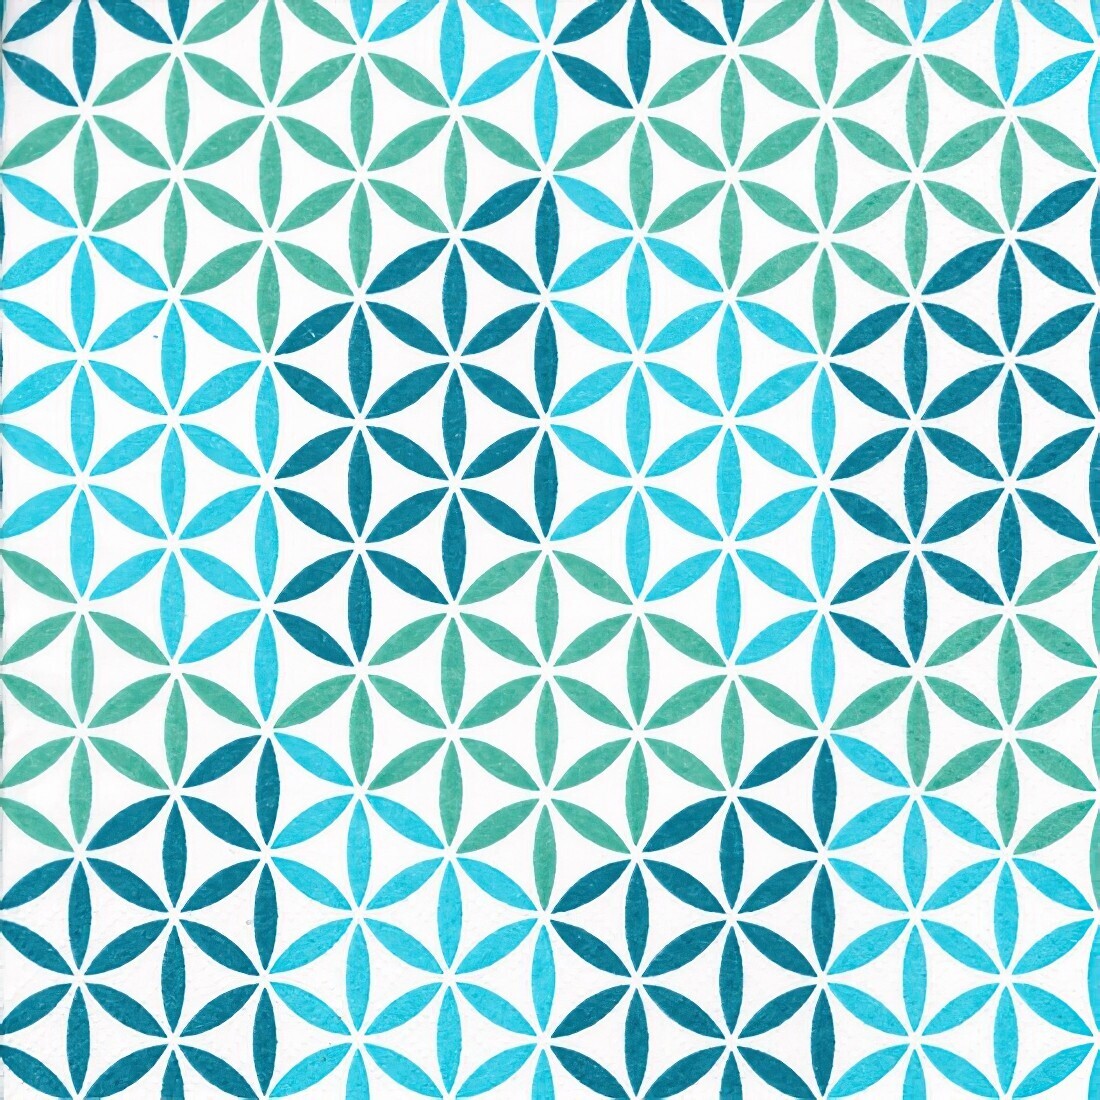 Decoupage Paper Napkins - Pattern - Abstrakt Cubes turqouise/aqua green (1 Sheet)